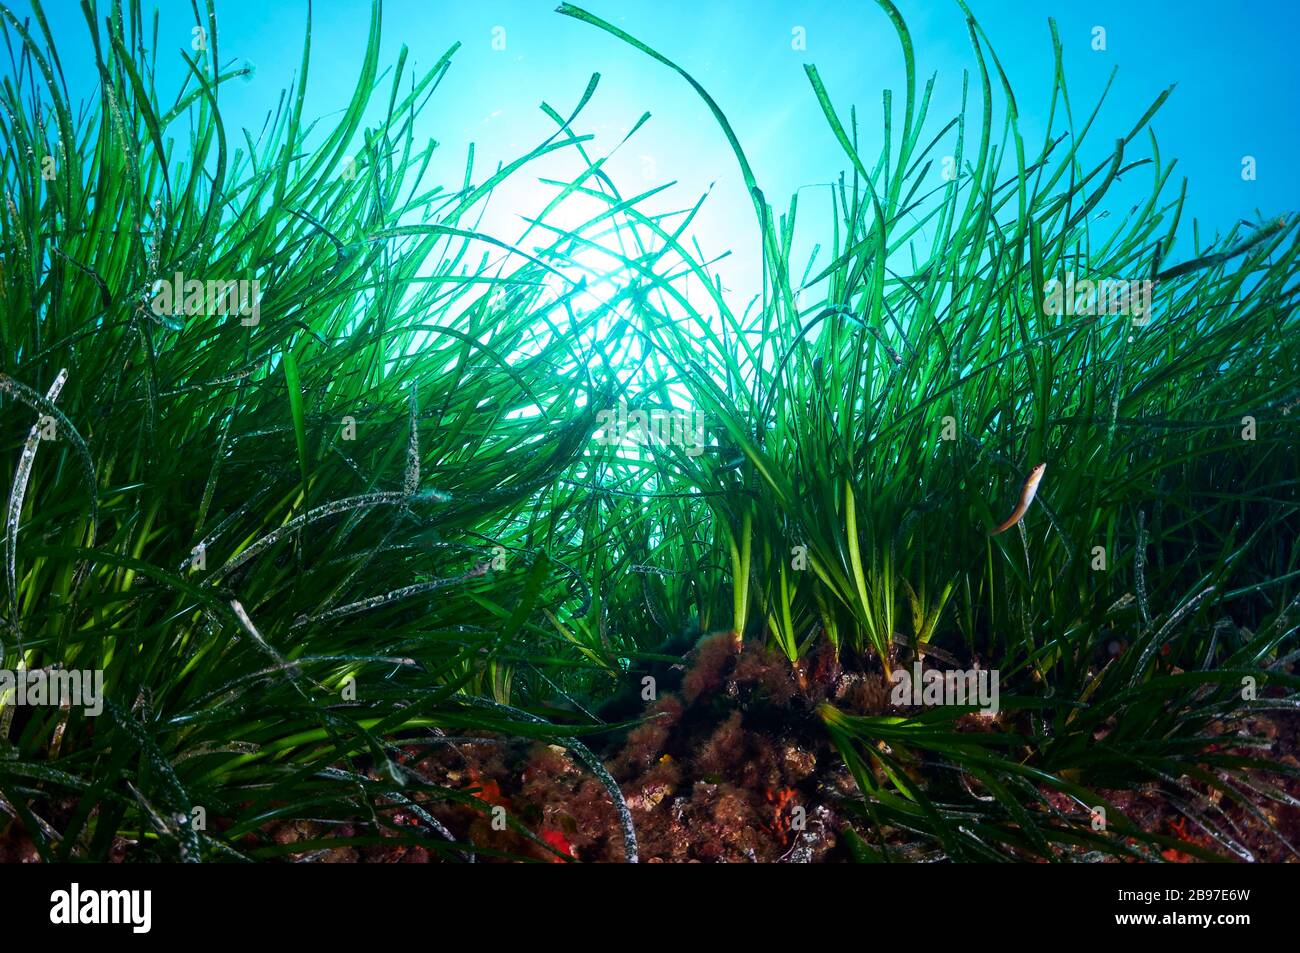 Unterwasserseagrass Neptun (Posidonia ozeanica) unter Sonneneinstrahlung im Naturpark Ses Salines (Formtera, Balearen, Mittelmeer, Spanien) Stockfoto